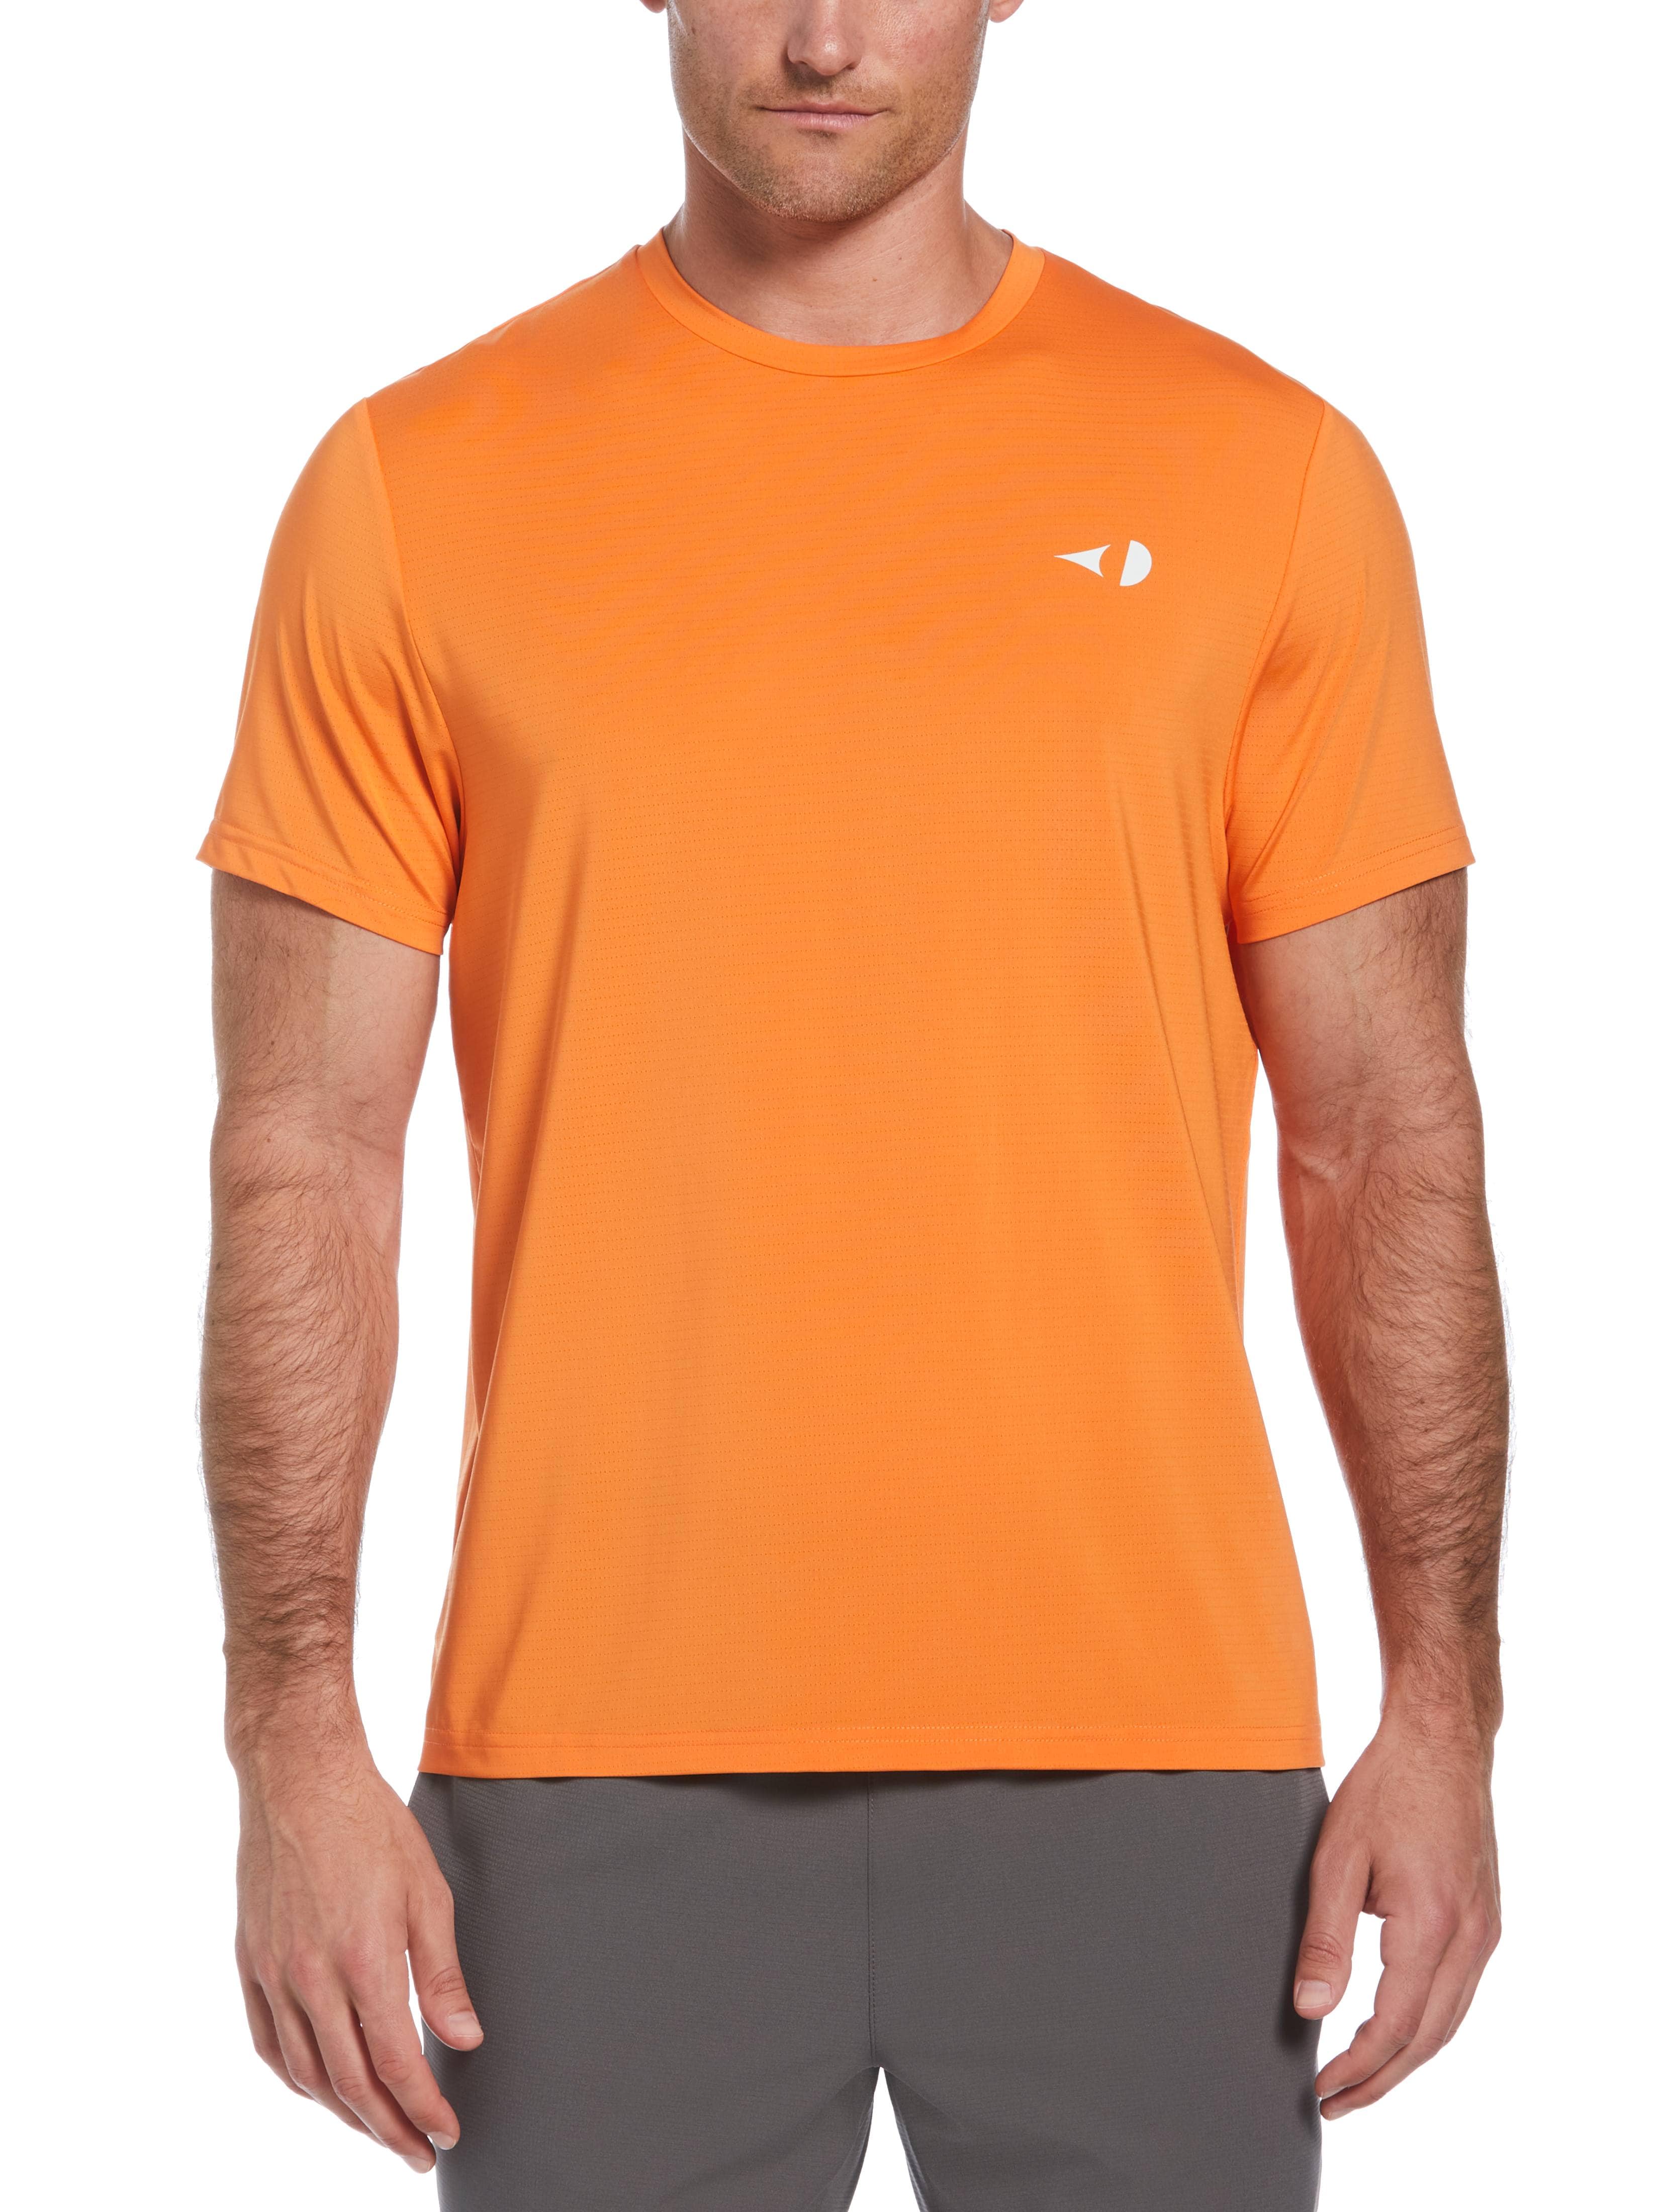 Grand Slam Mens Pin Hole Mesh Tennis T-Shirt, Size Medium, Candied Yams Orange, Polyester/Elastane | Golf Apparel Shop